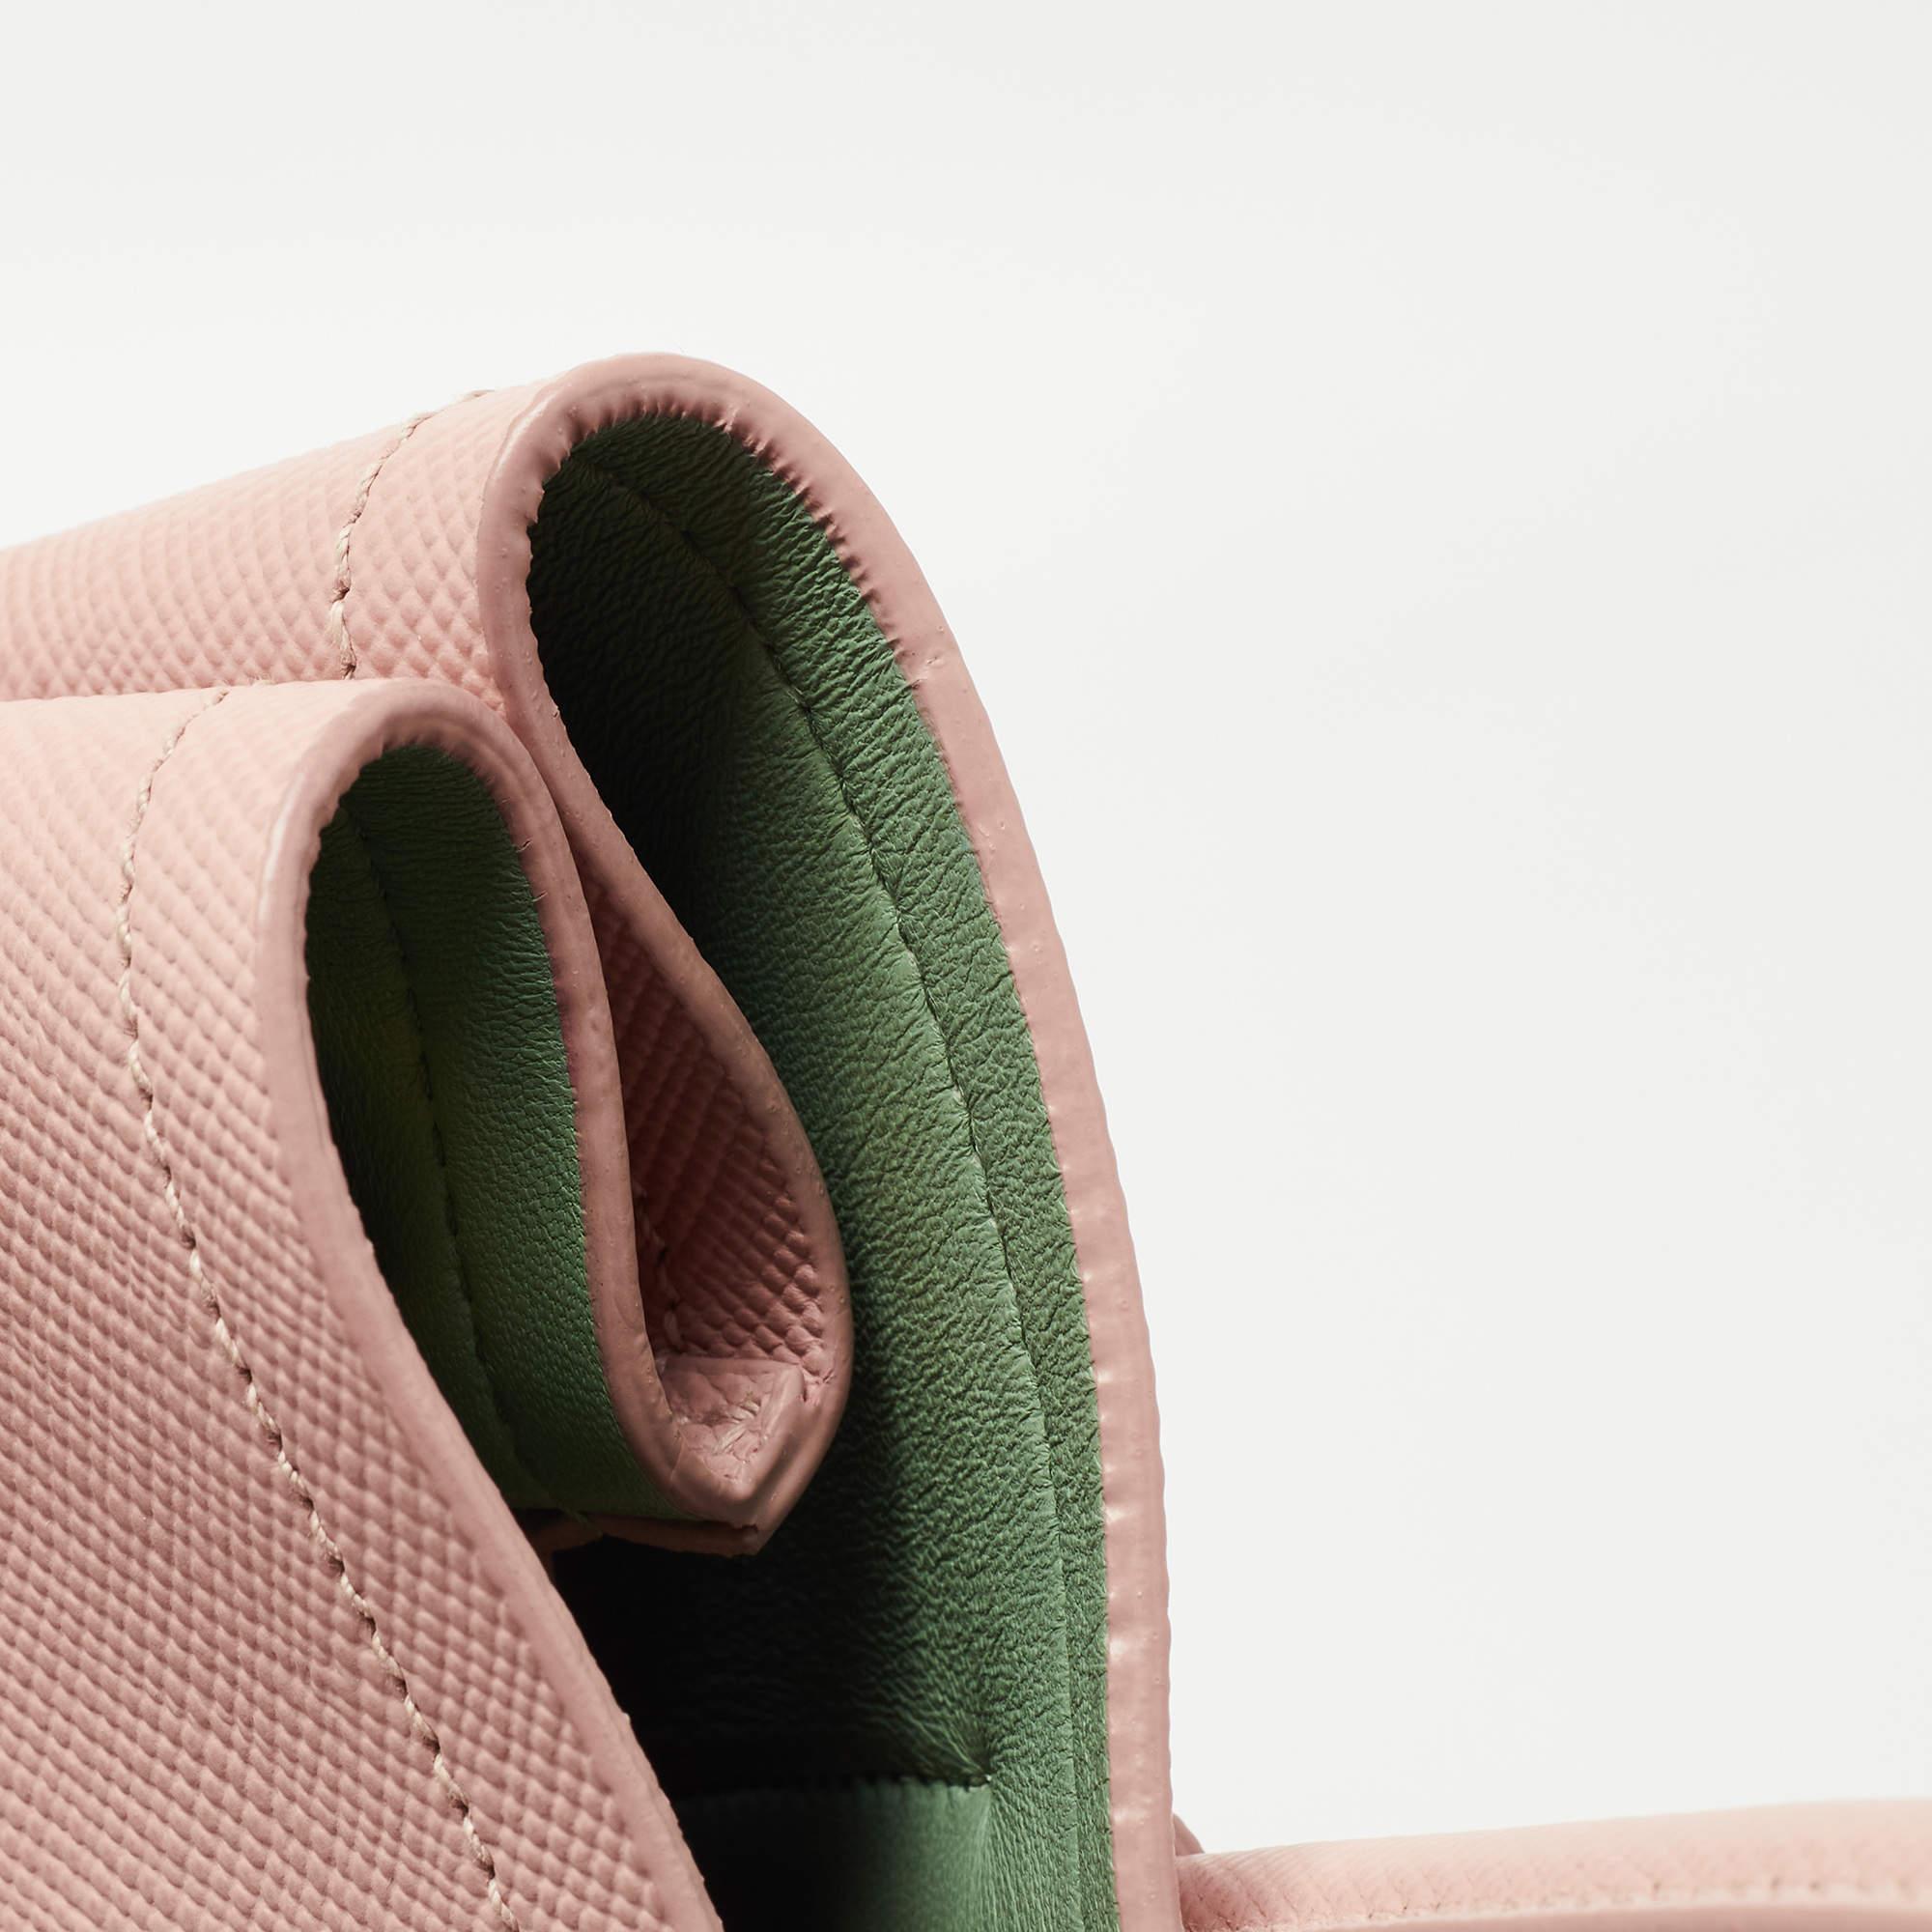 Prada Pink Saffiano Cuir Leather Medium Double Handle Tote 9